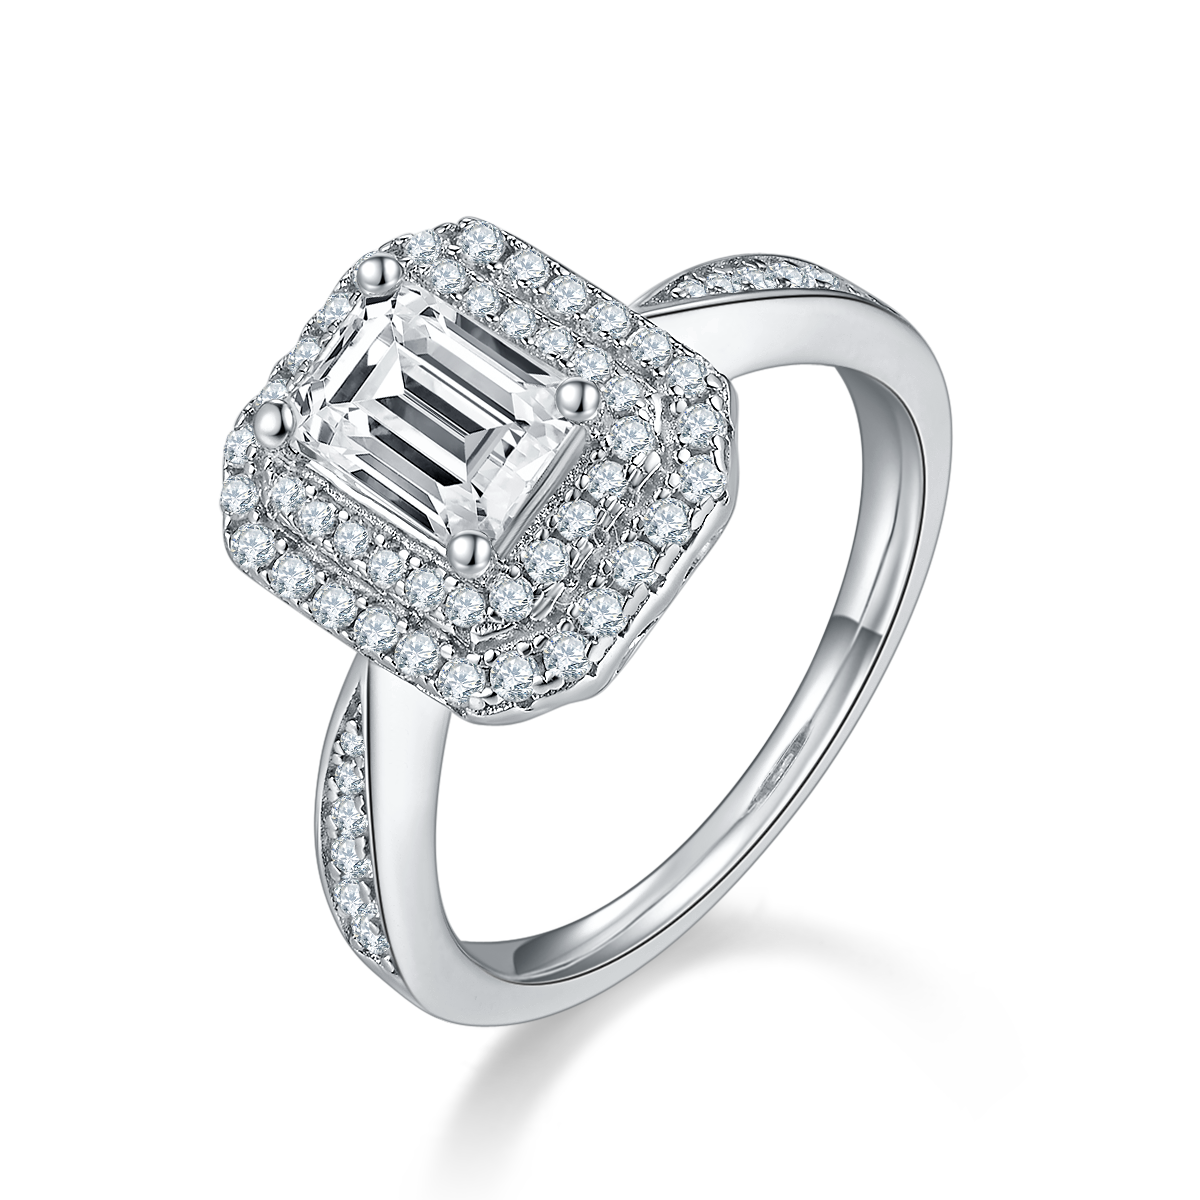 Luxurious Soleste Halo 1.0 carat Emerald Cut Moissanite Engagement Ring